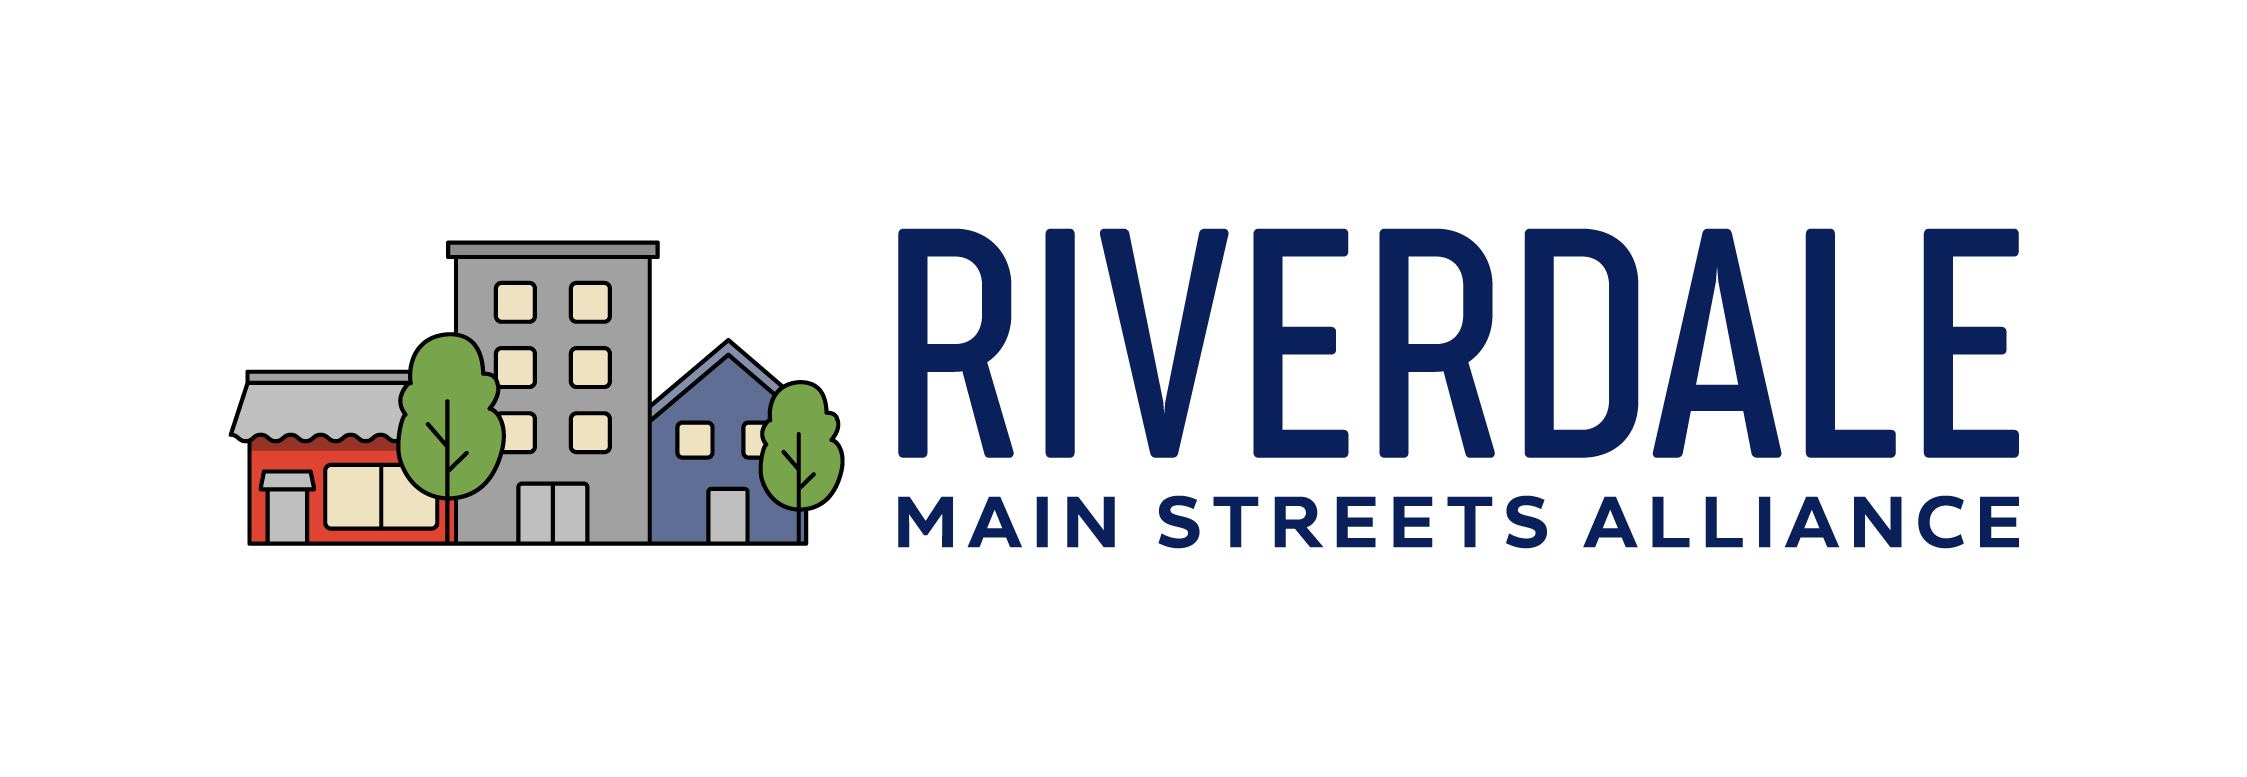 Riverdale Main Streets Alliance